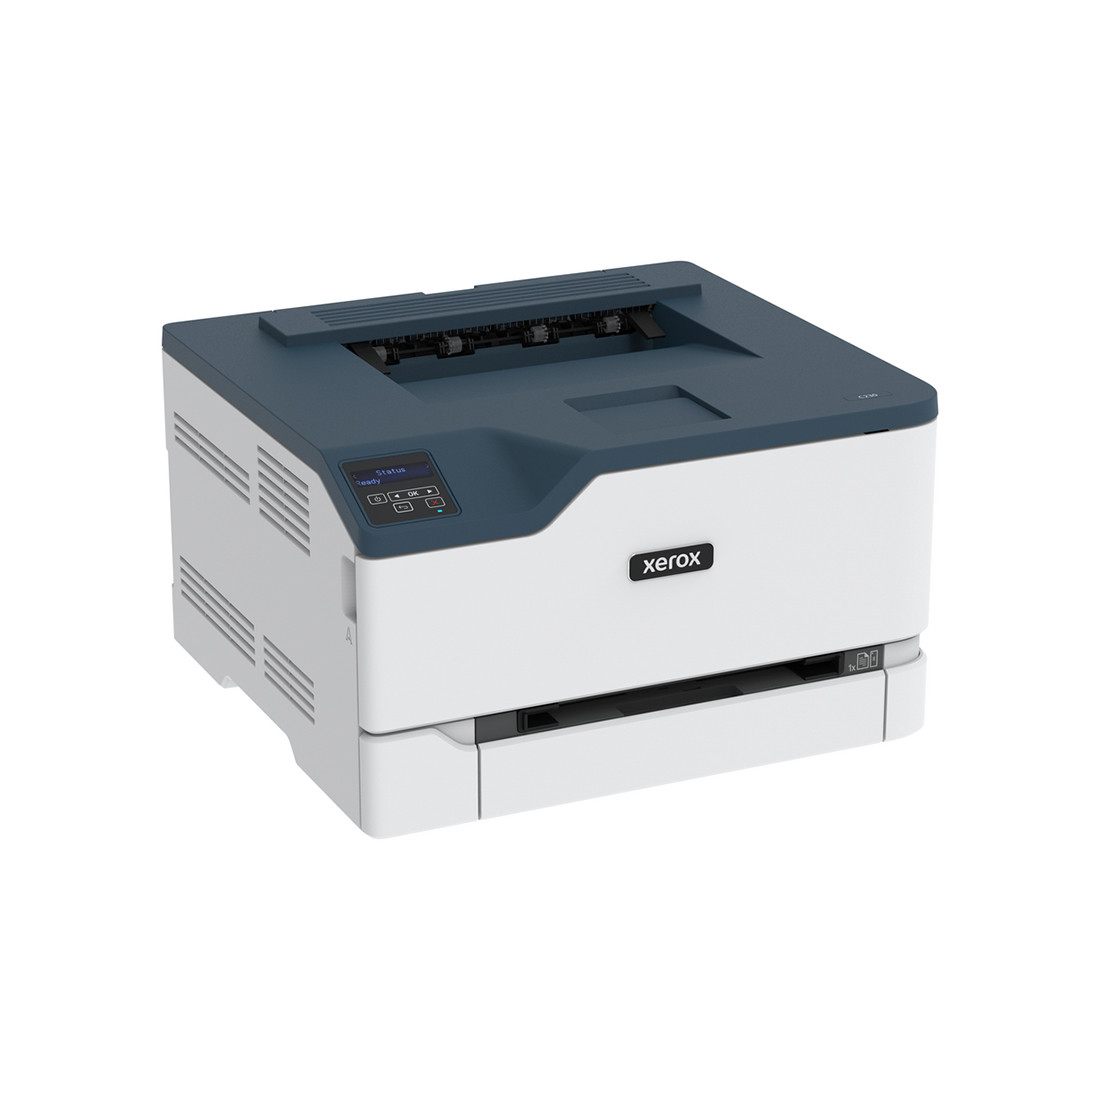 Цветной принтер с Wi-Fi Xerox C230DNI